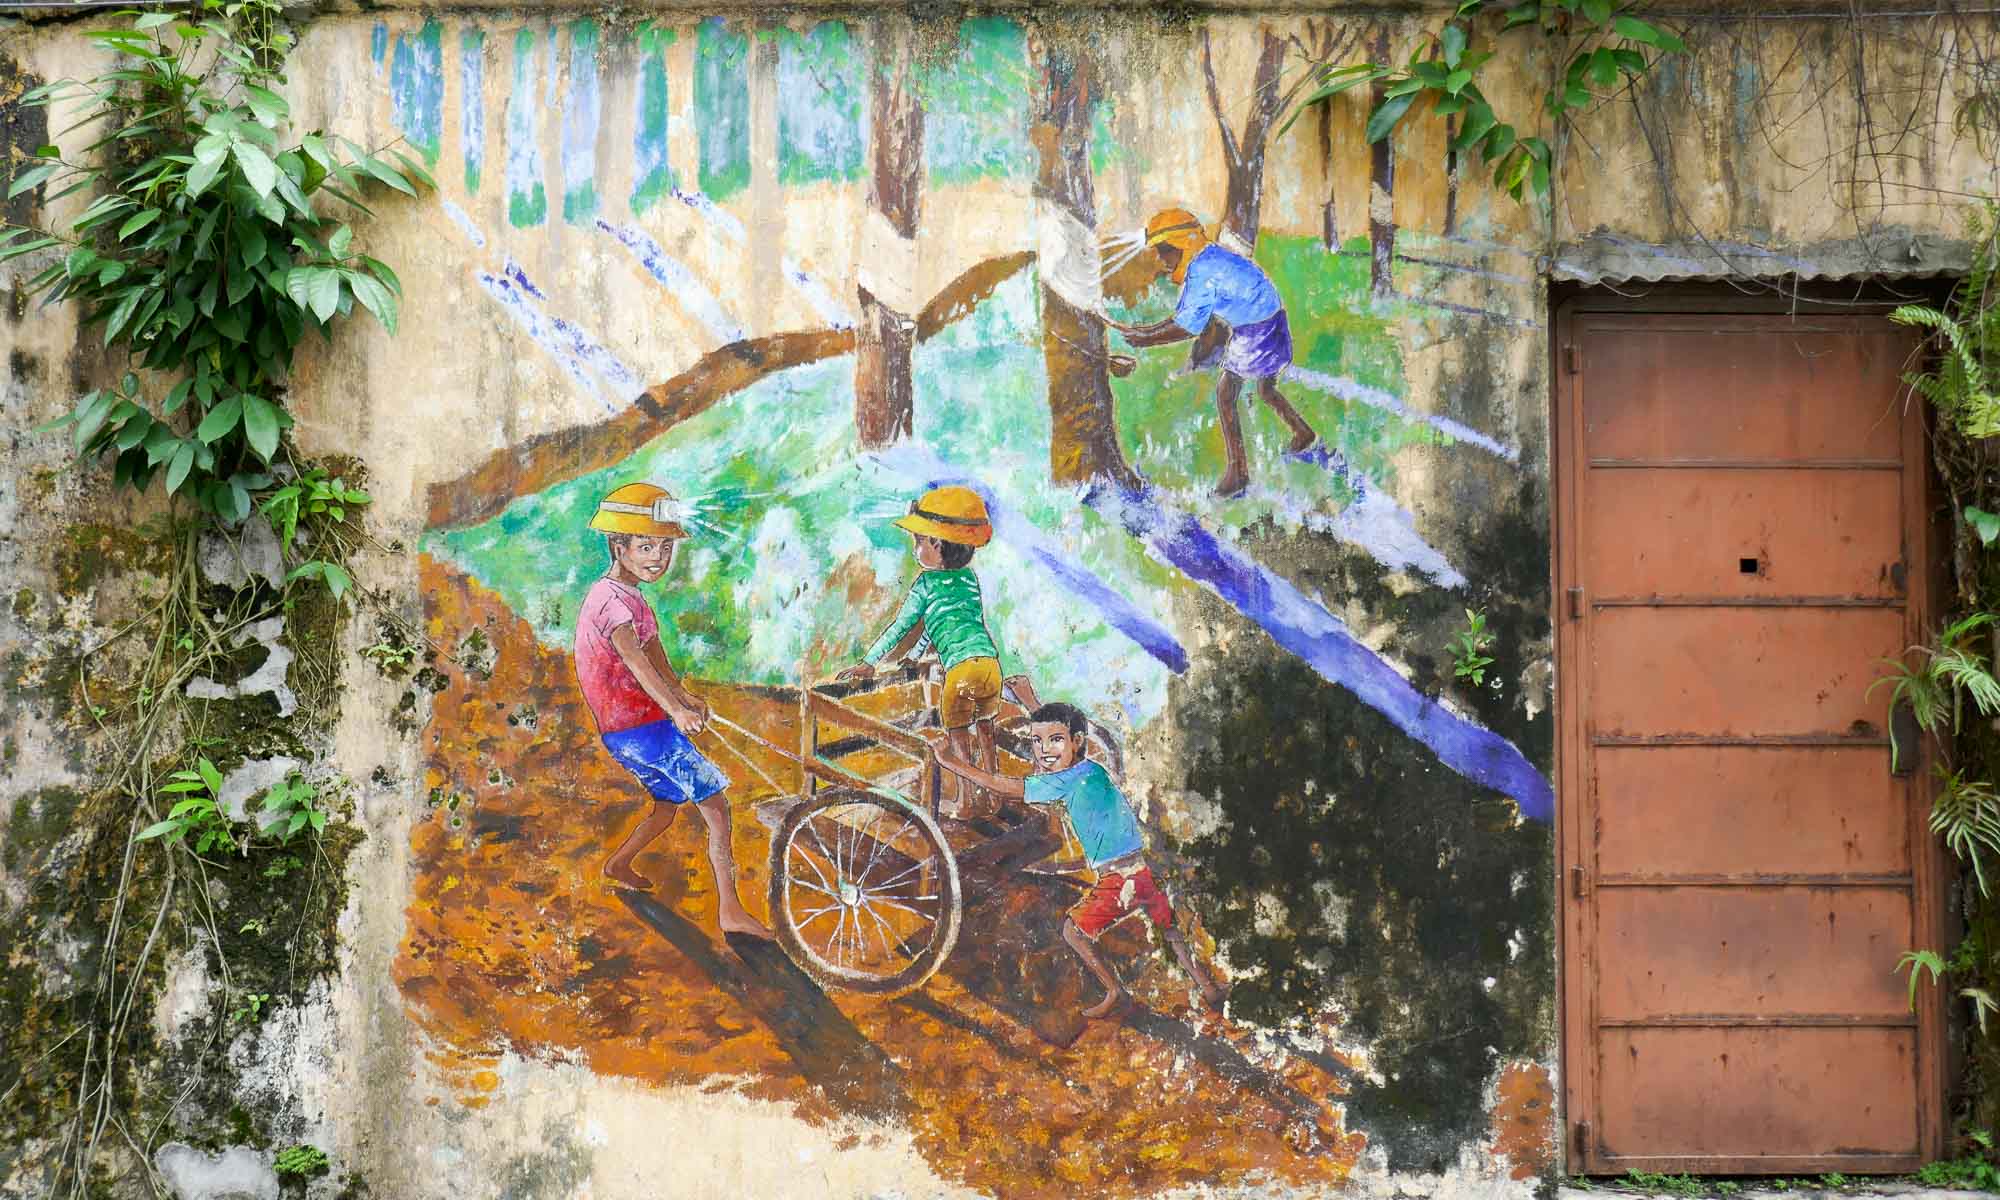 Street art: Rubber plantation